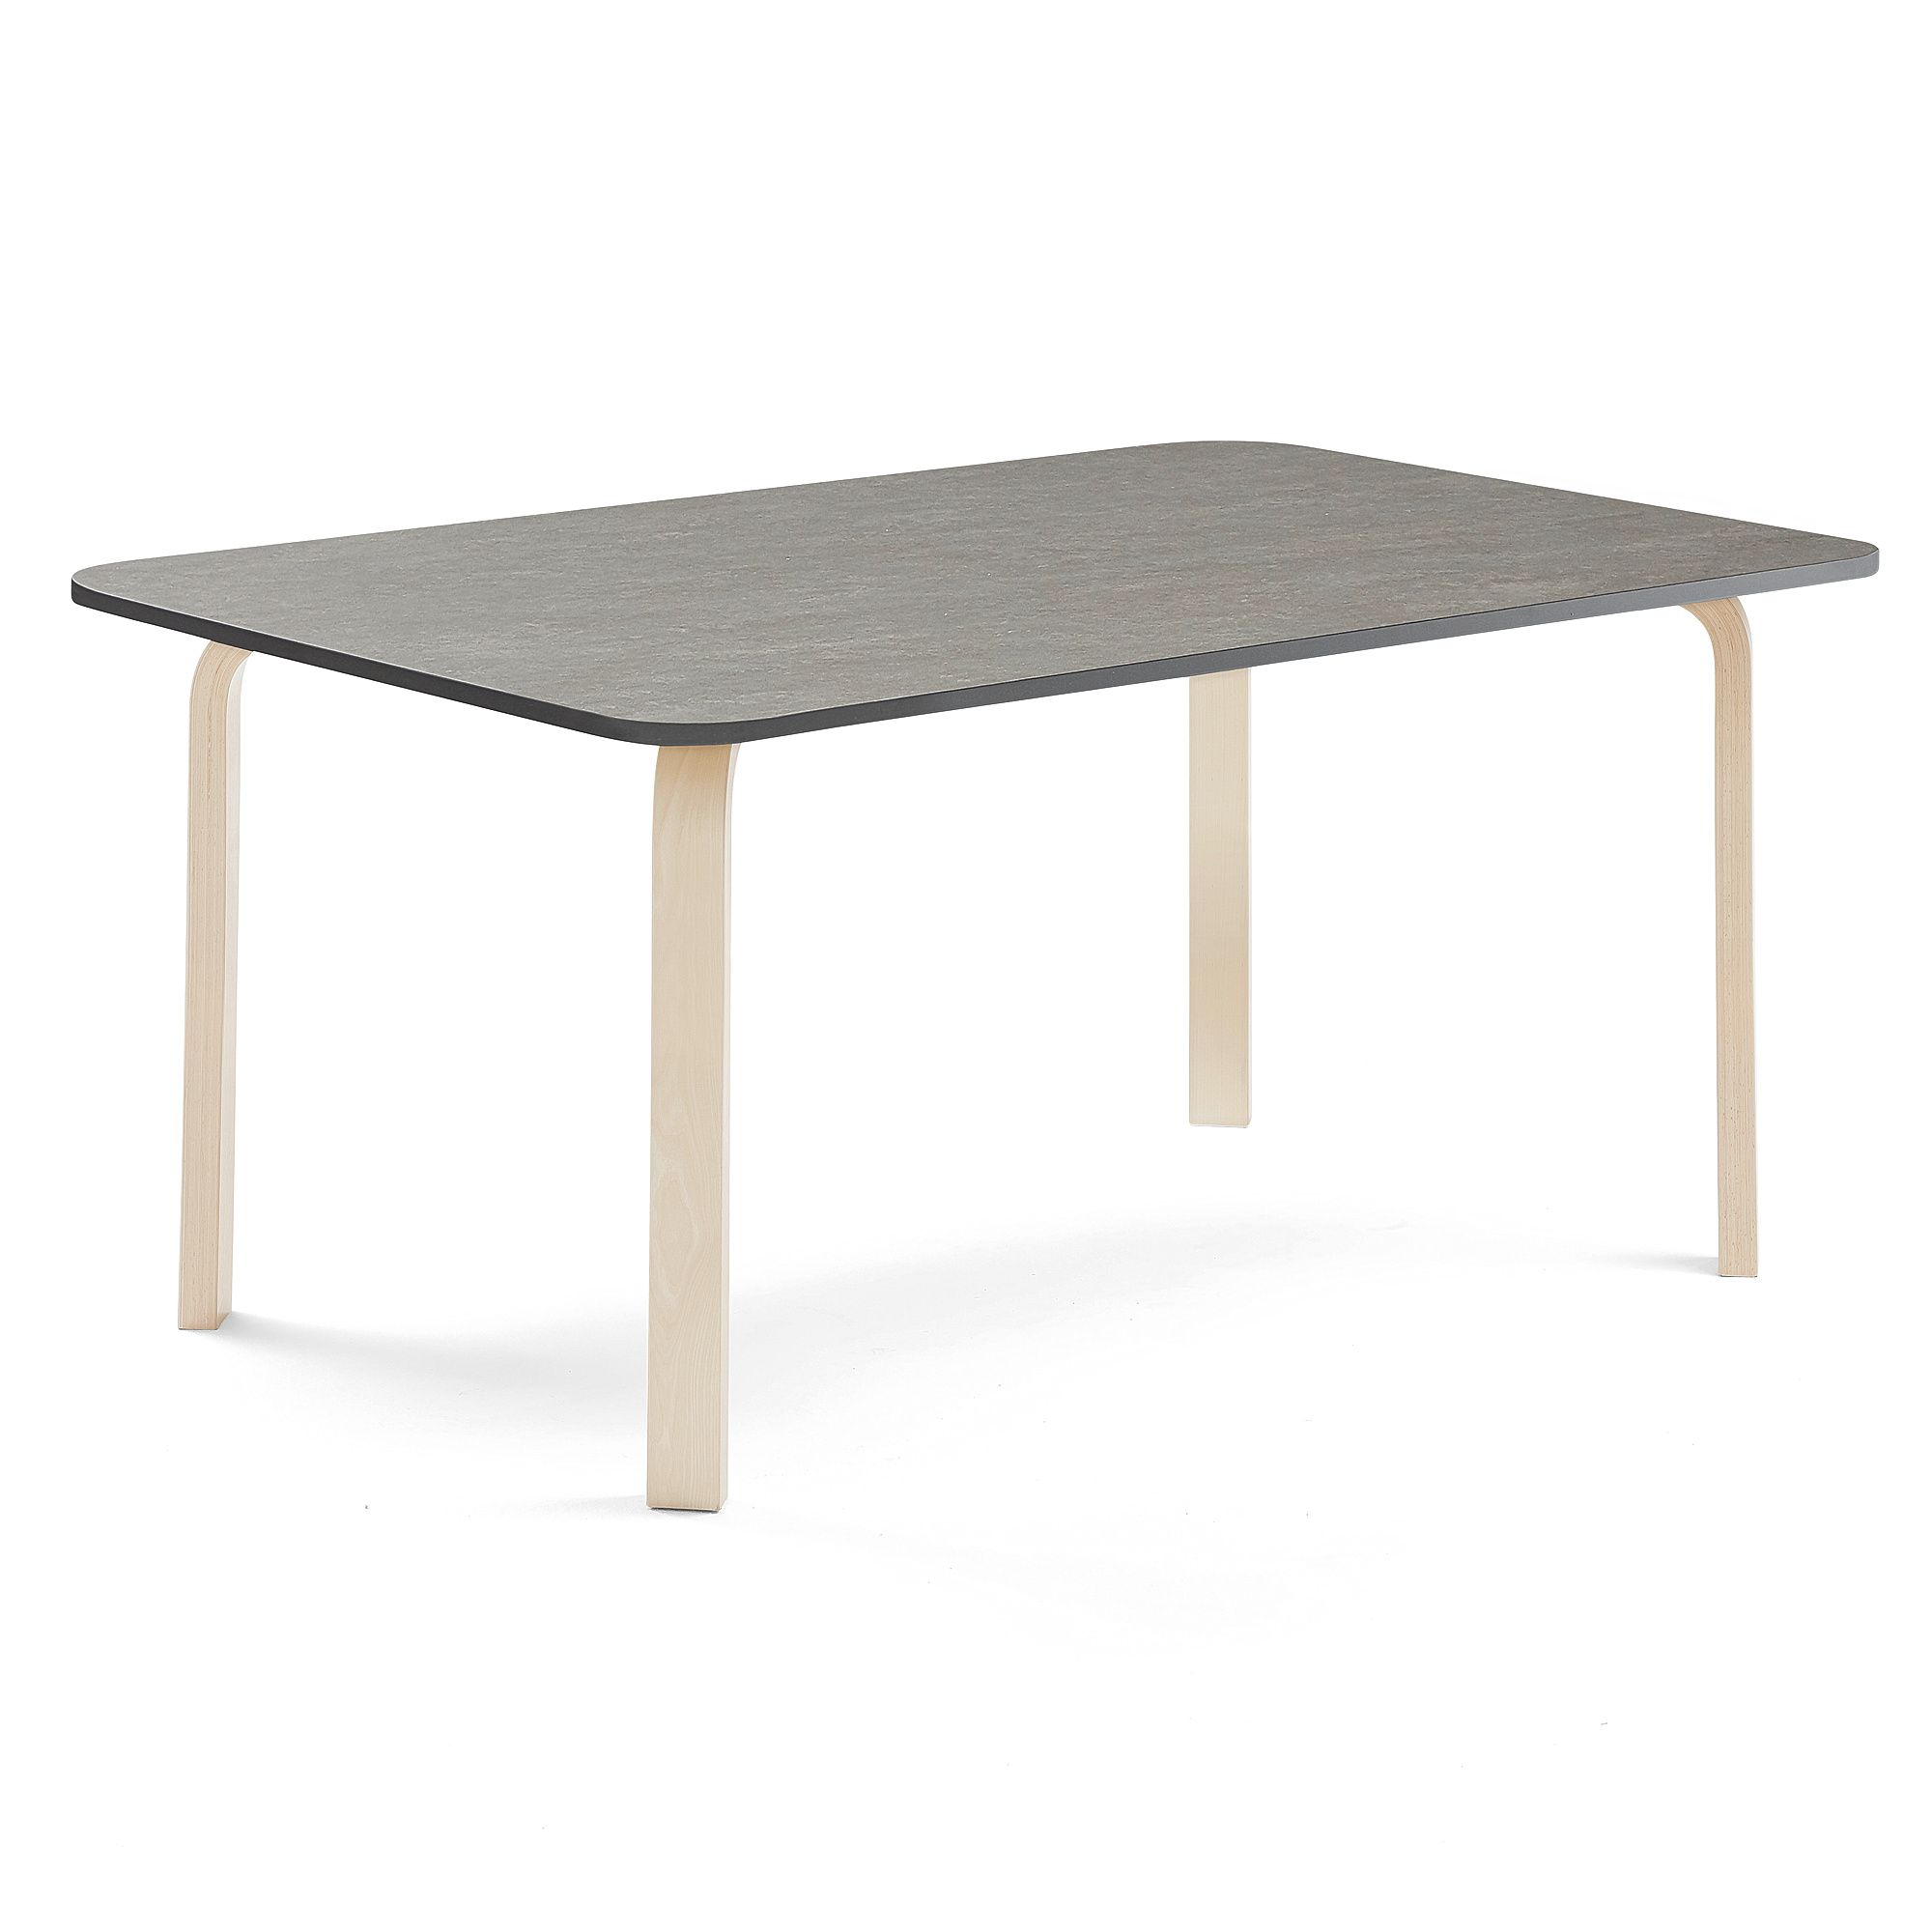 Stůl ELTON, 1800x800x640 mm, bříza, akustické linoleum, tmavě šedá